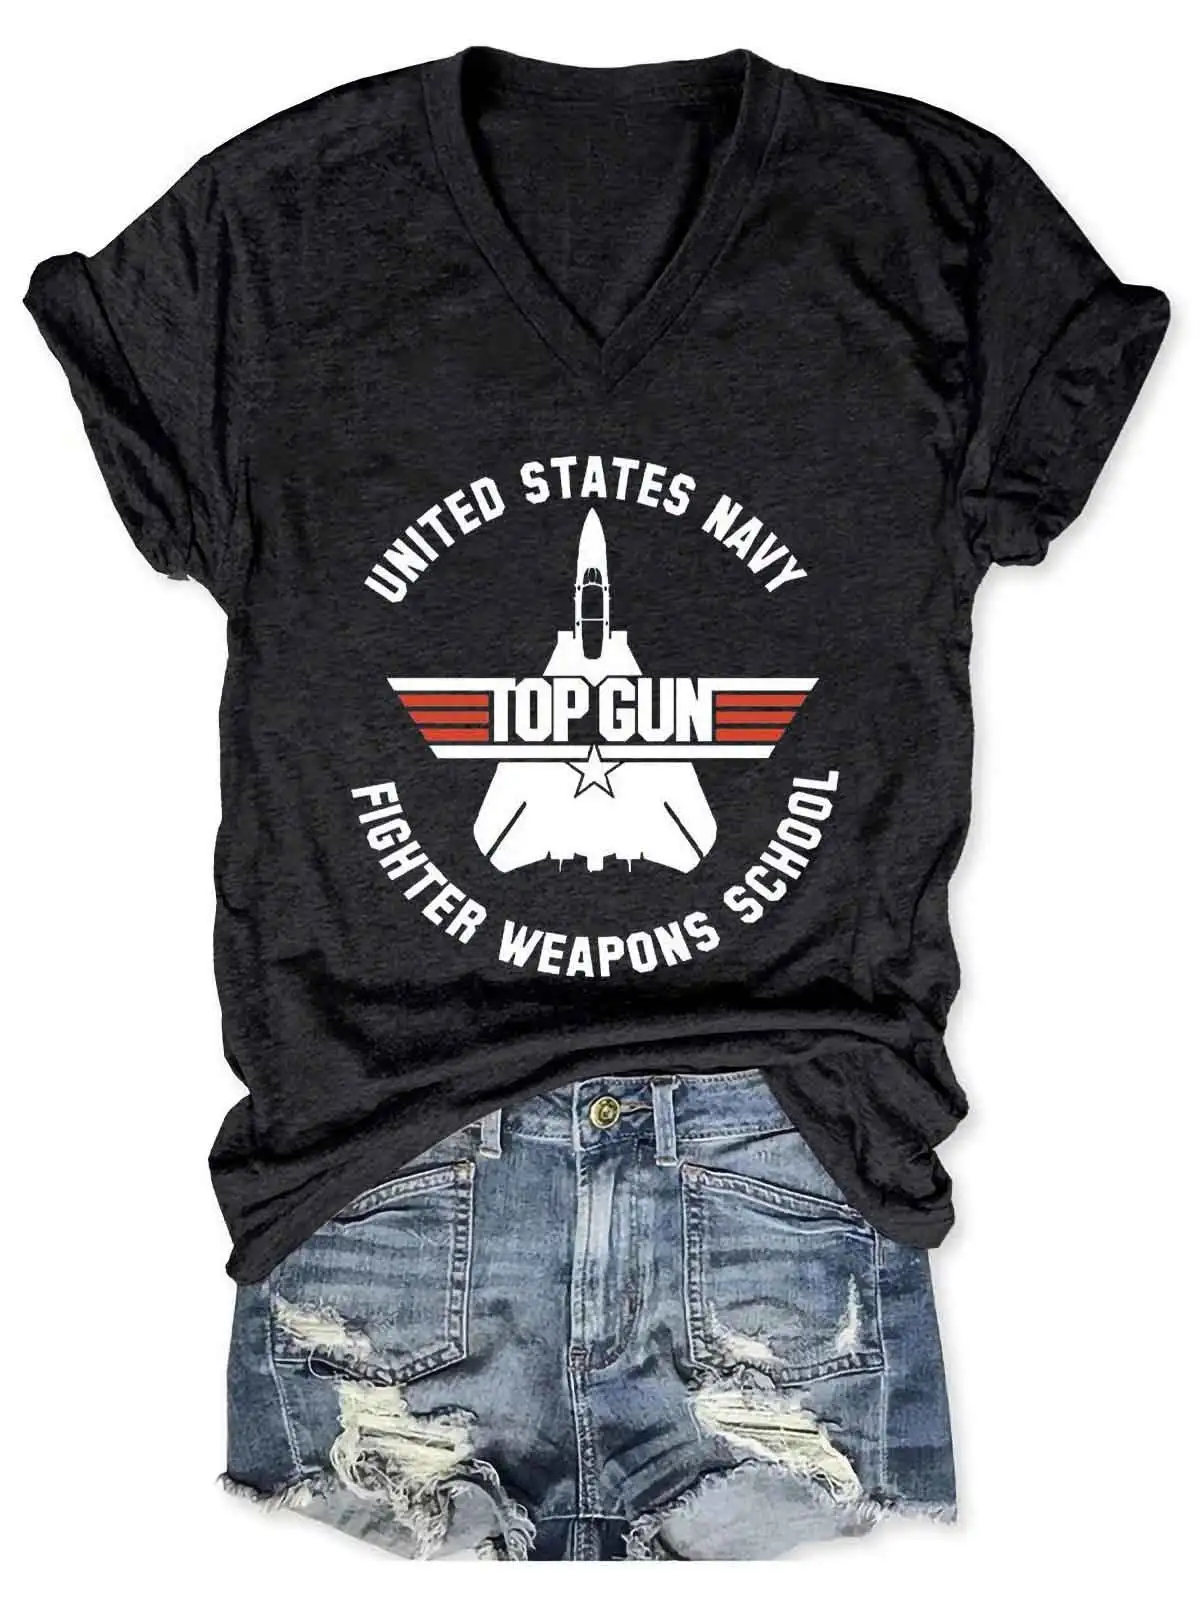 Women's Top Gun Fighter Weapons School V-Neck T-Shirt